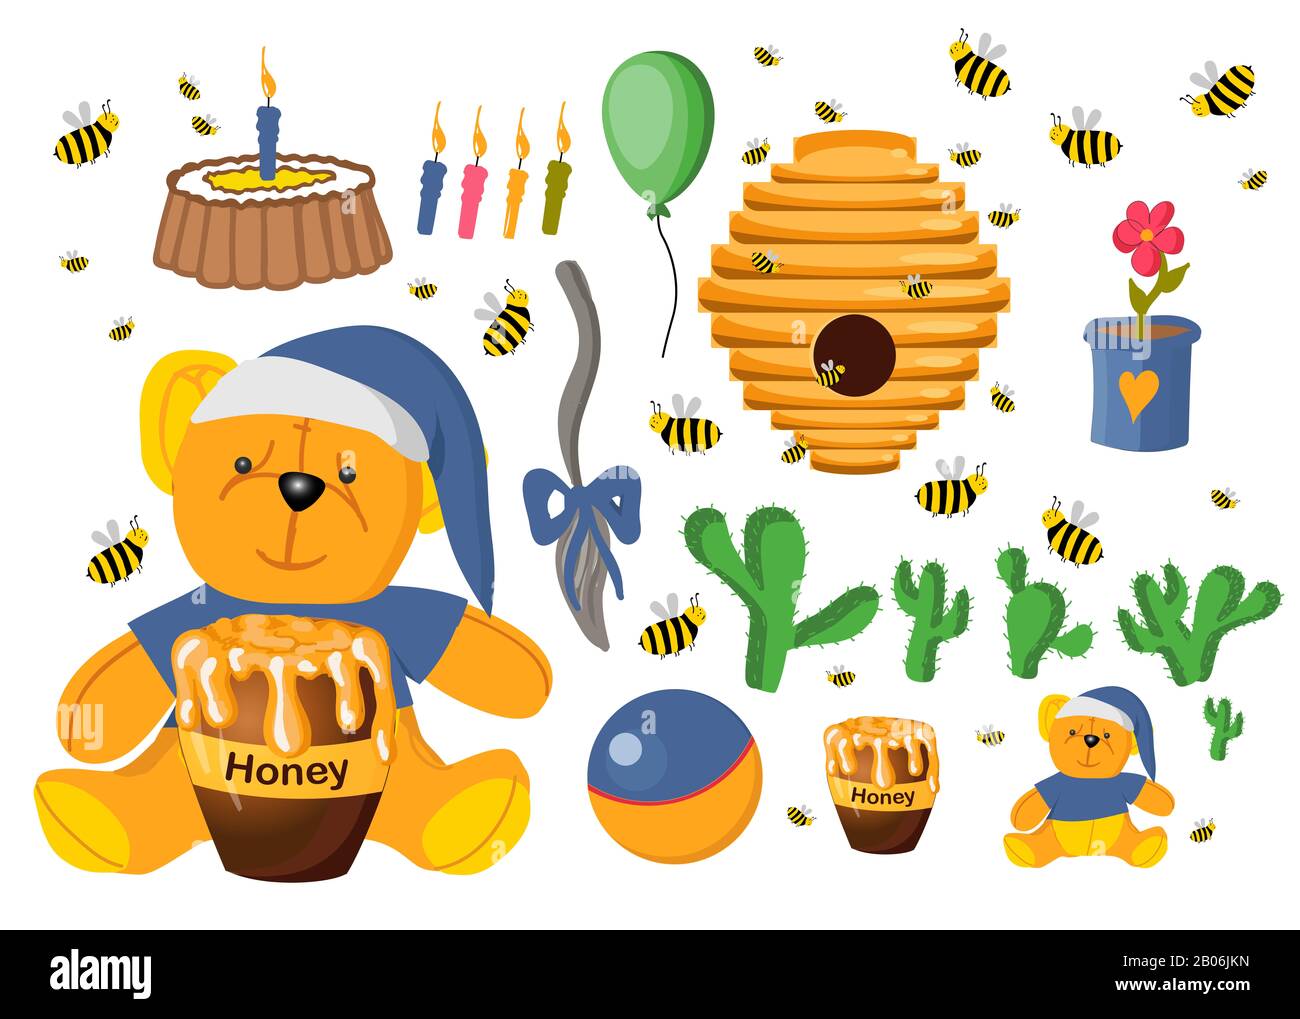 winnie the pooh honey pot clip art - Google Search